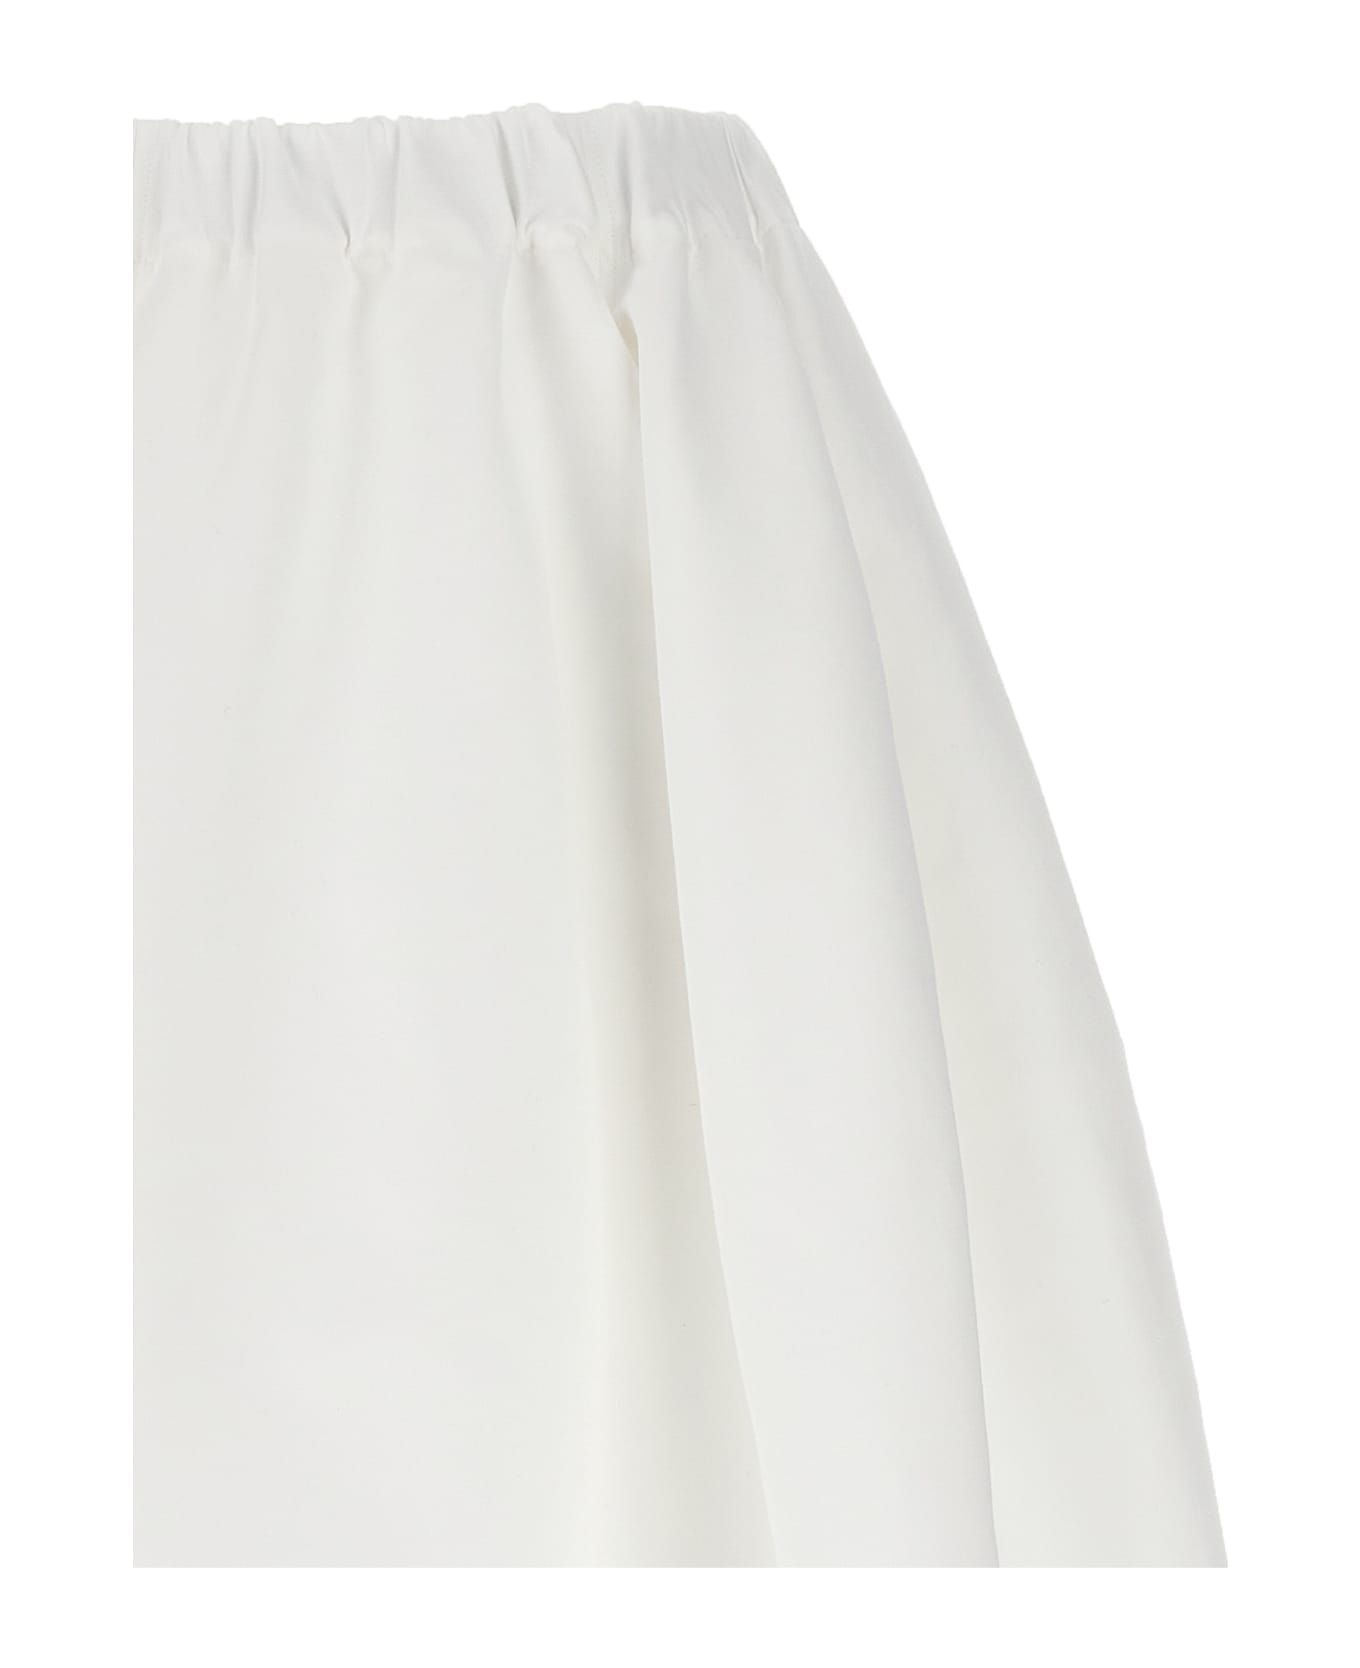 Marni Cotton Gabardine Skirt - White スカート